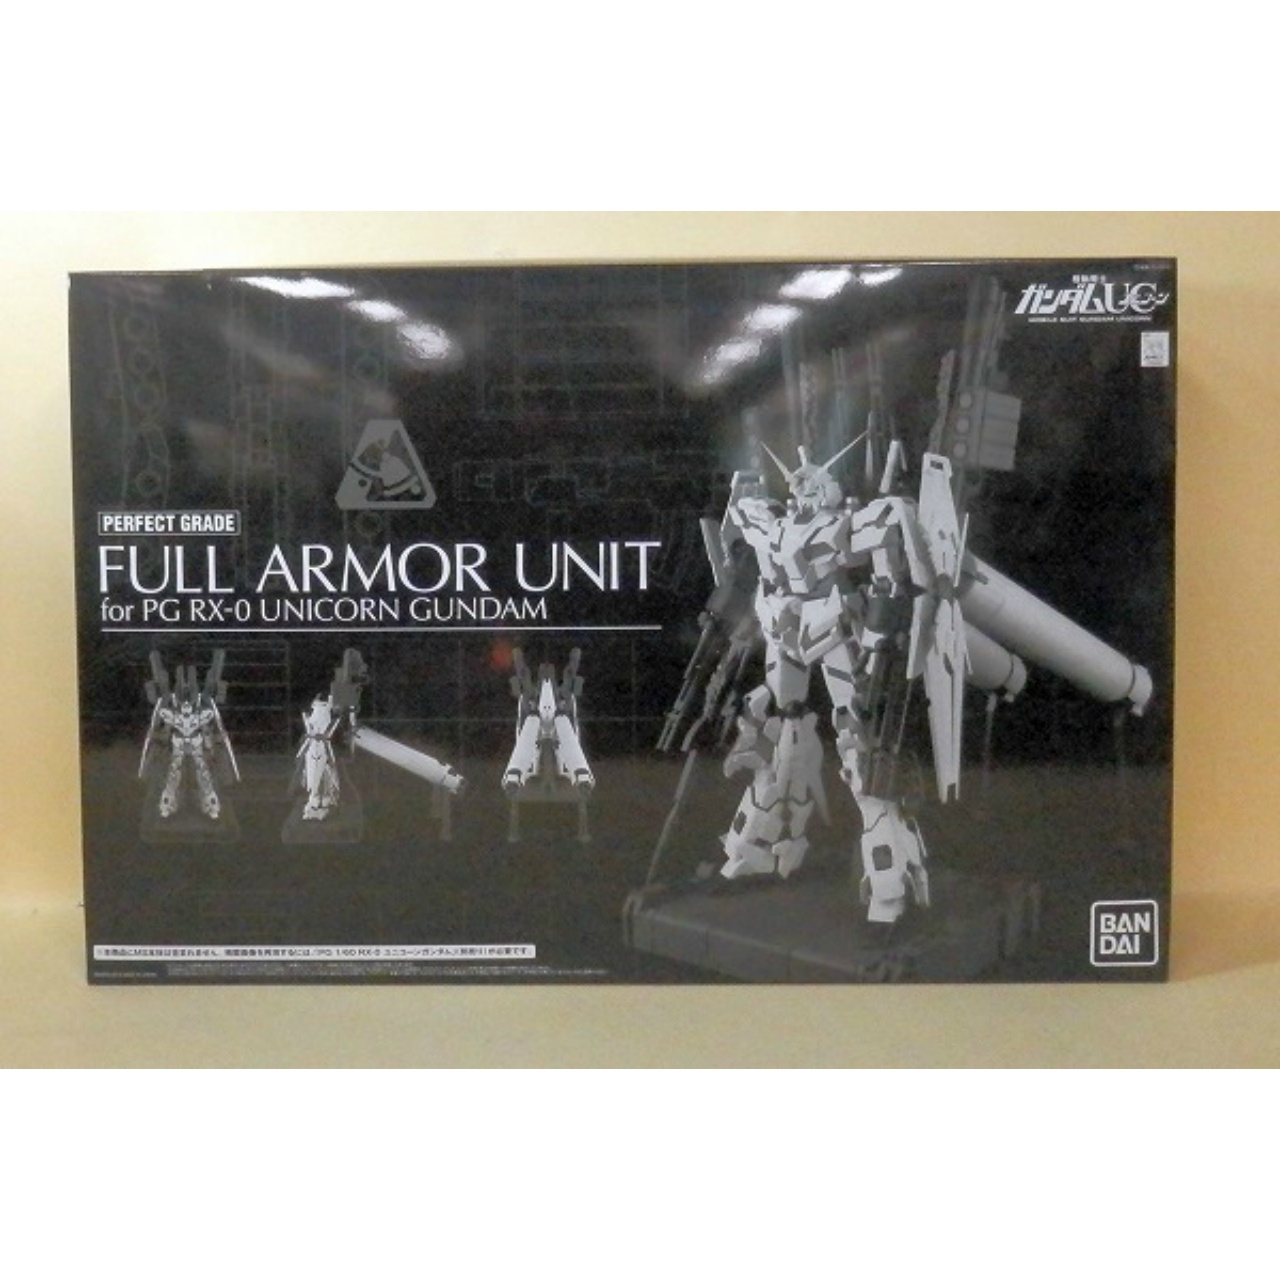 PG Perfect Grade Unicorn Gundam Full Armor Expansion set